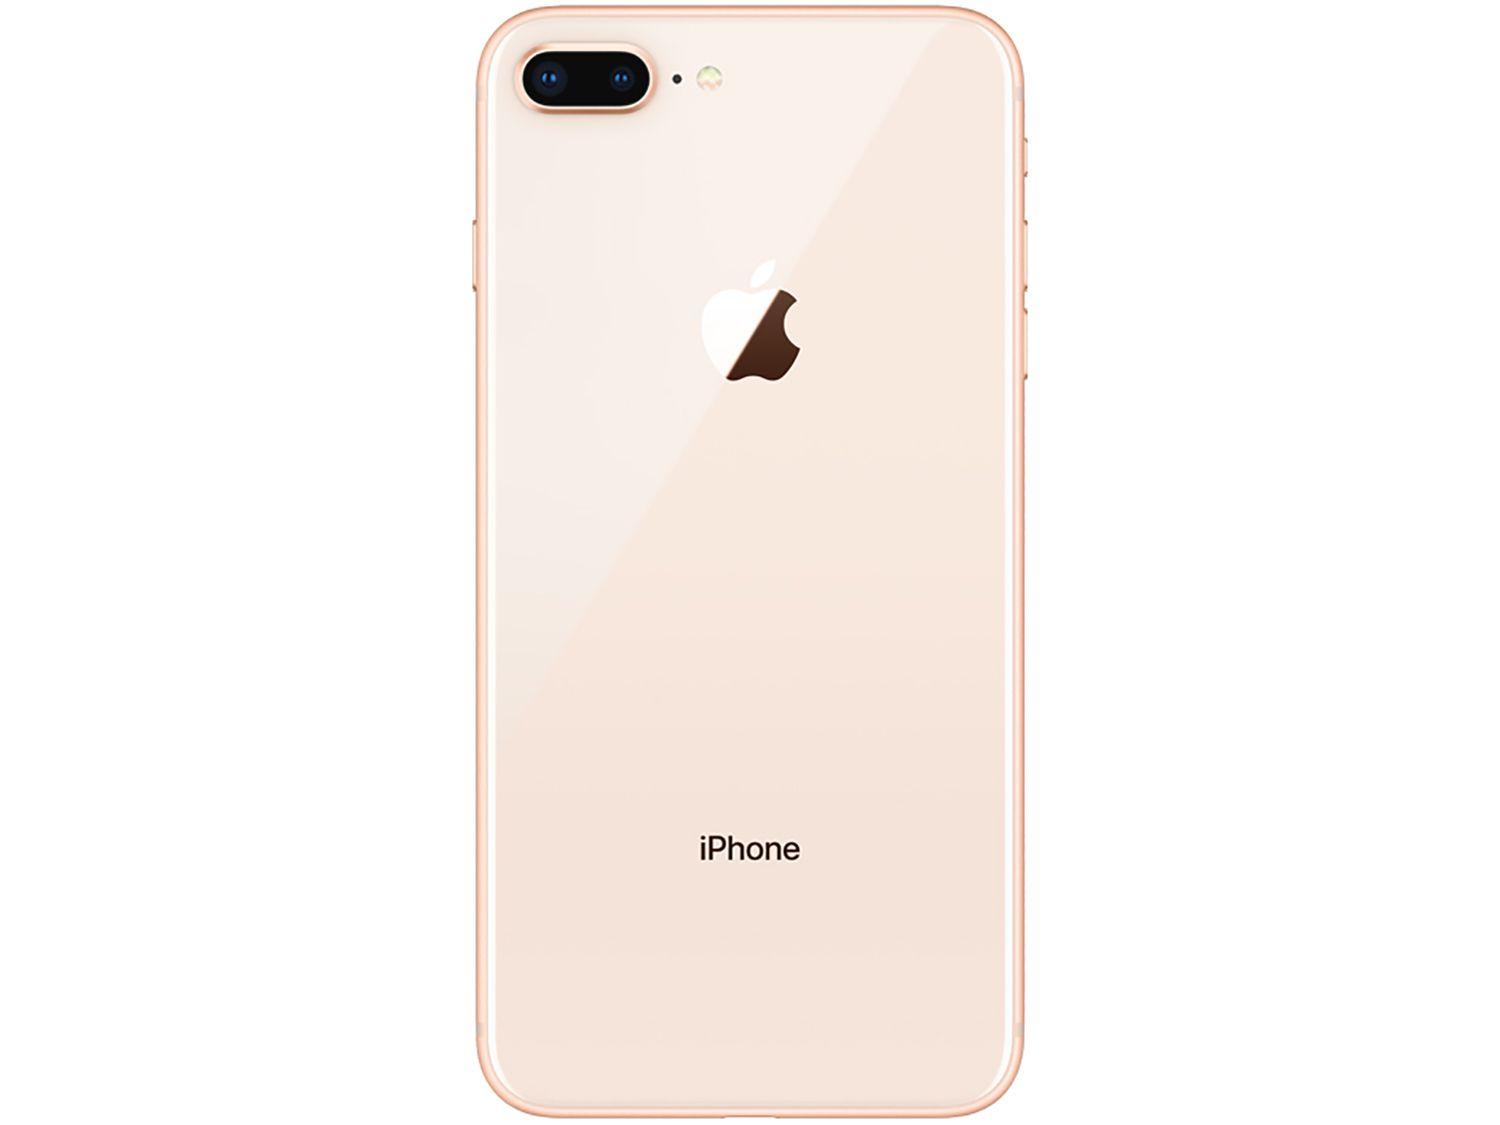 iPhone 8 Plus Apple 256GB Dourado 4G Tela 5,5” Retina Câmera 12MP iOS